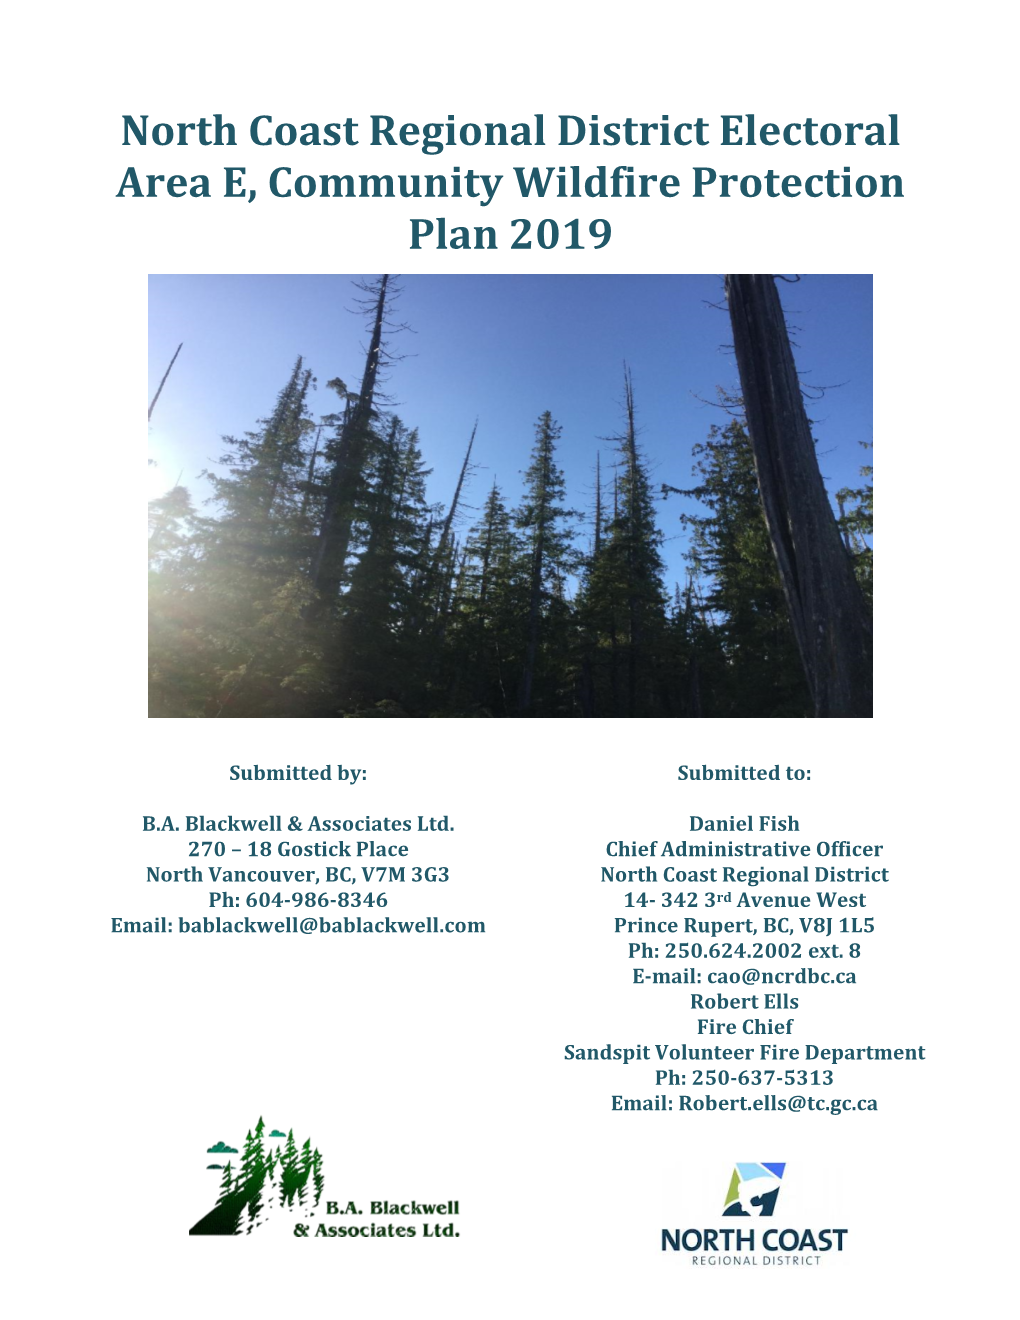 North Coast Regional District Electoral Area E, Community Wildfire Protection Plan 2019